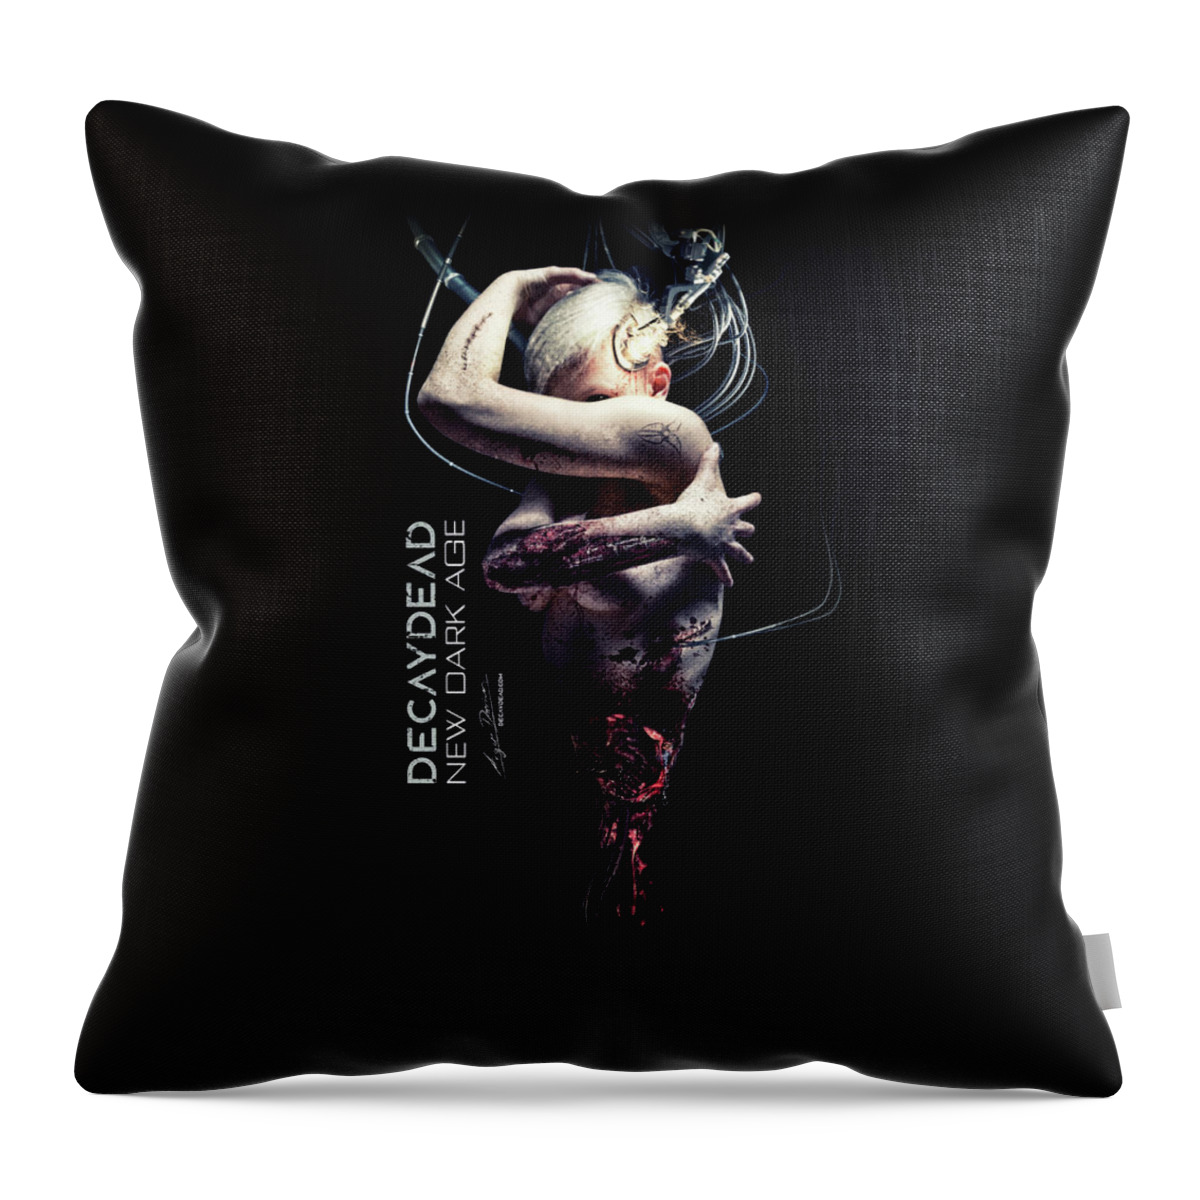 Argus Dorian Throw Pillow featuring the digital art The R-Evolution of human kind by Argus Dorian